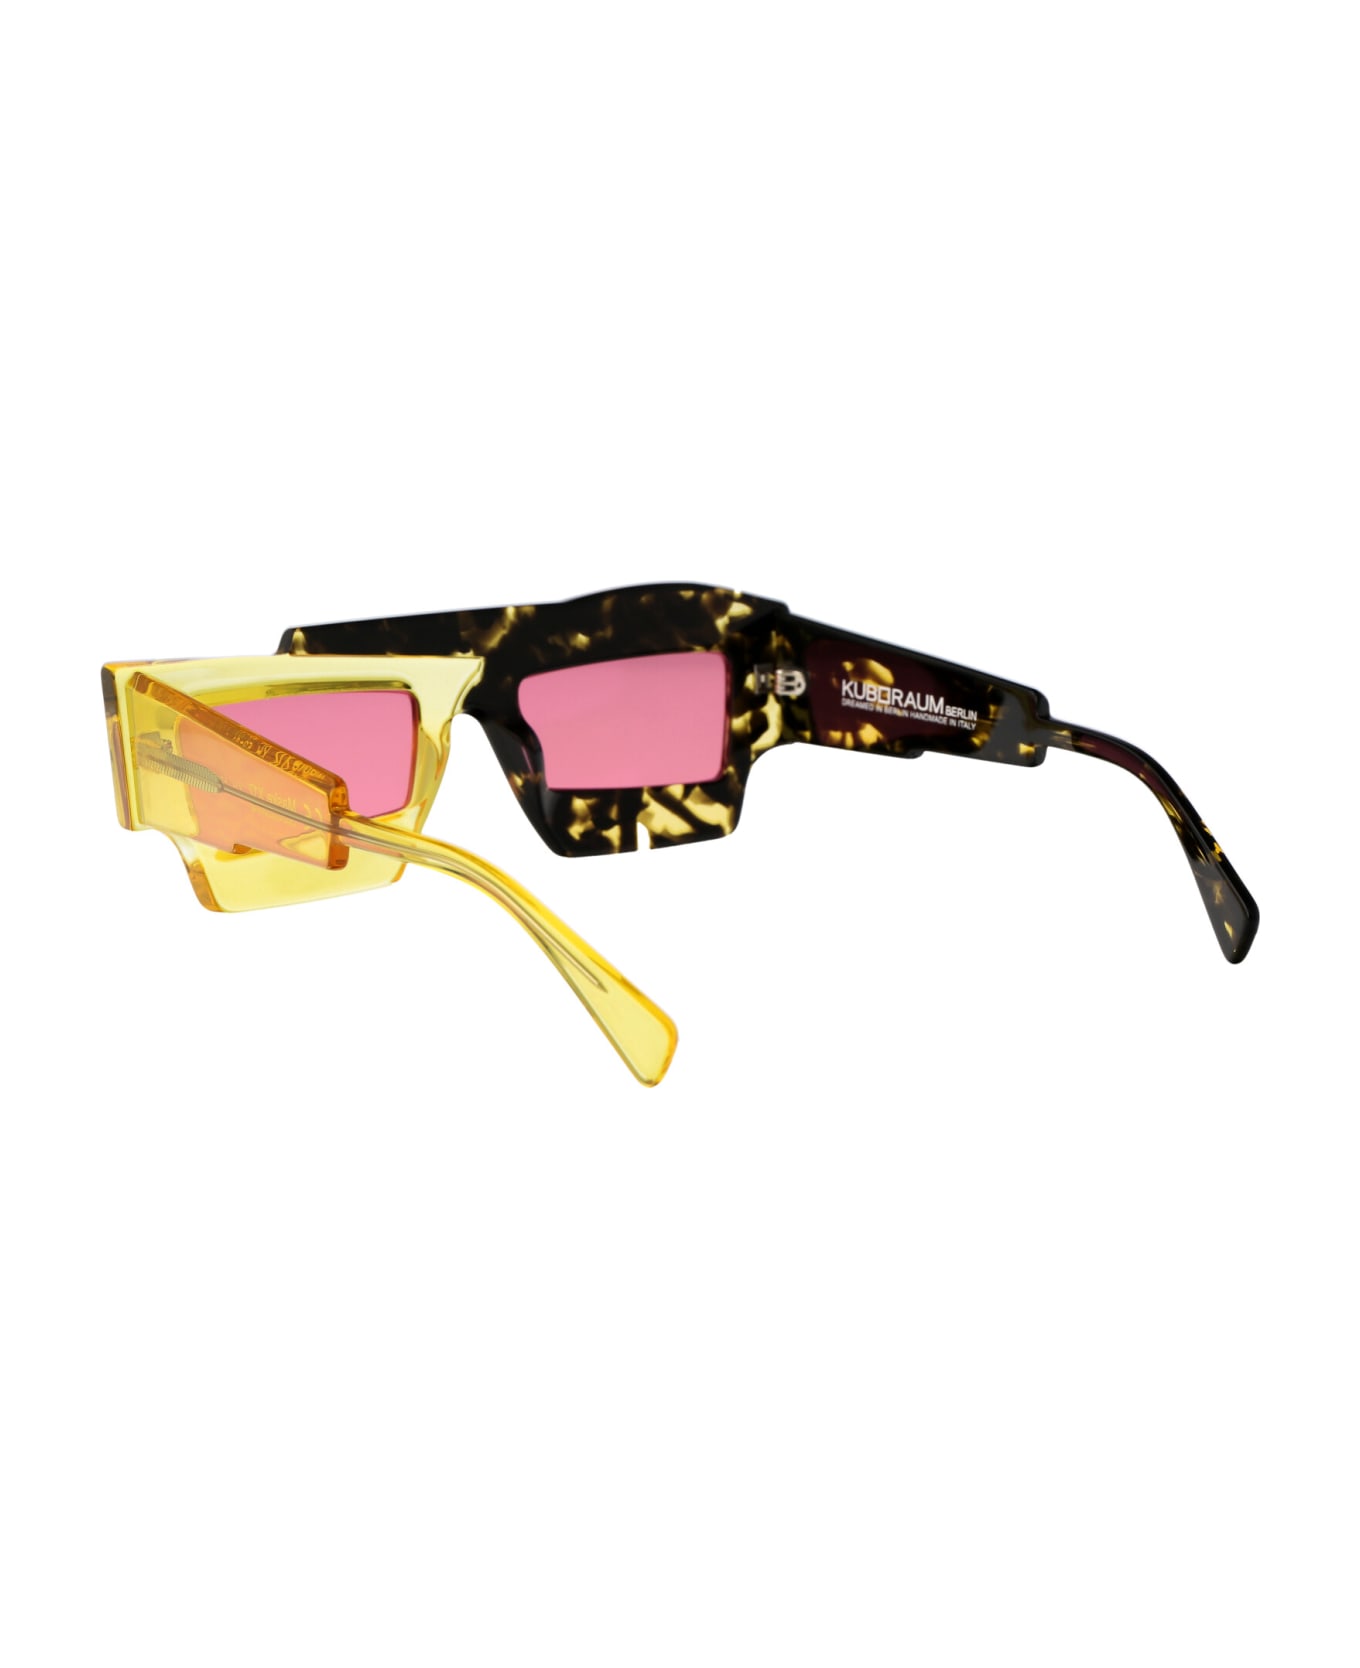 Kuboraum Maske X12 Sunglasses - YH pink1*